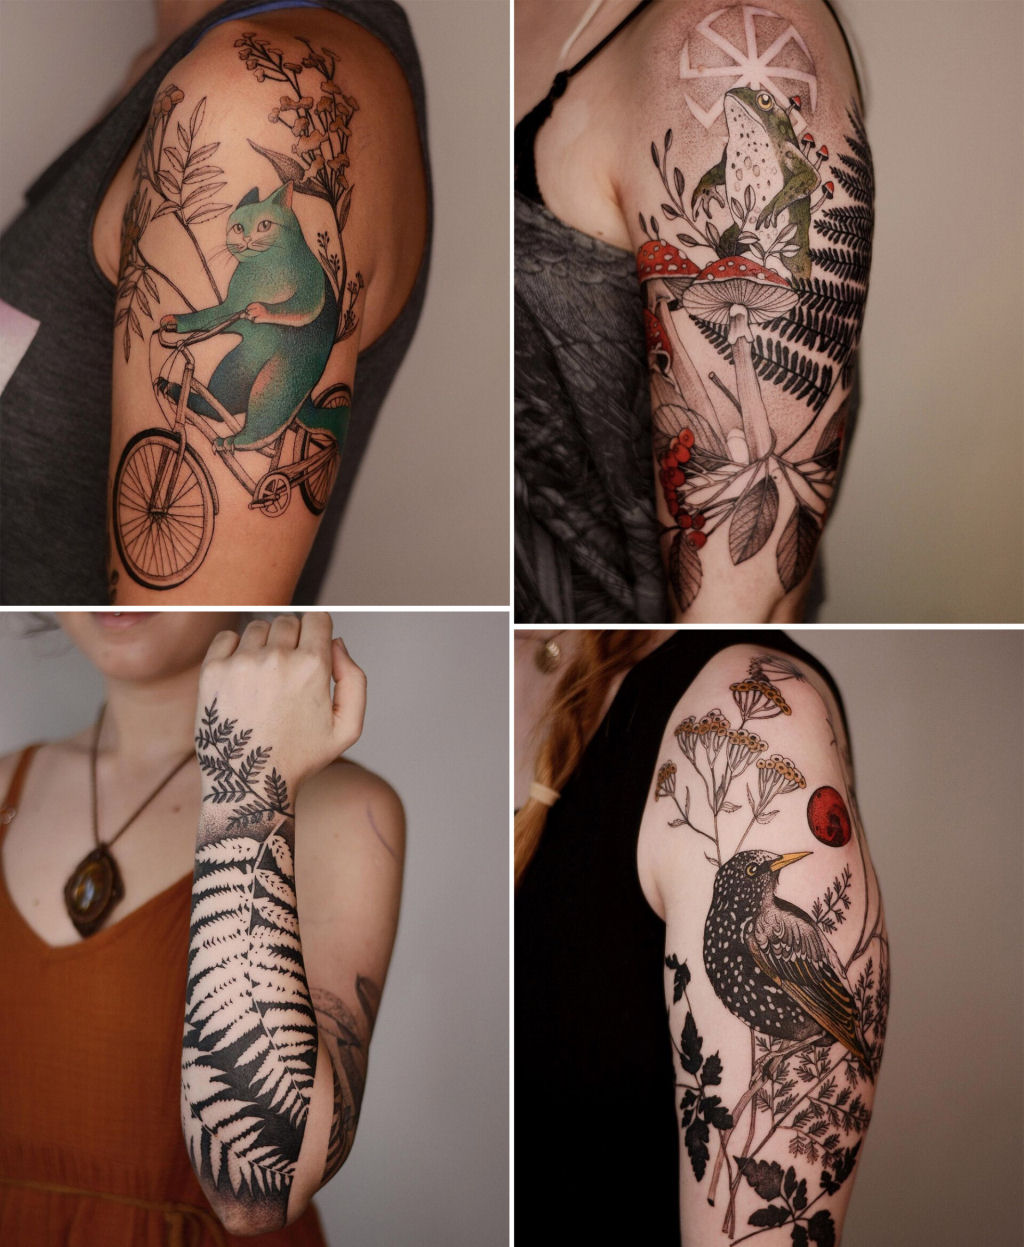 Tatuagens finamente delineadas combinam flora e fauna de forma delicada 04